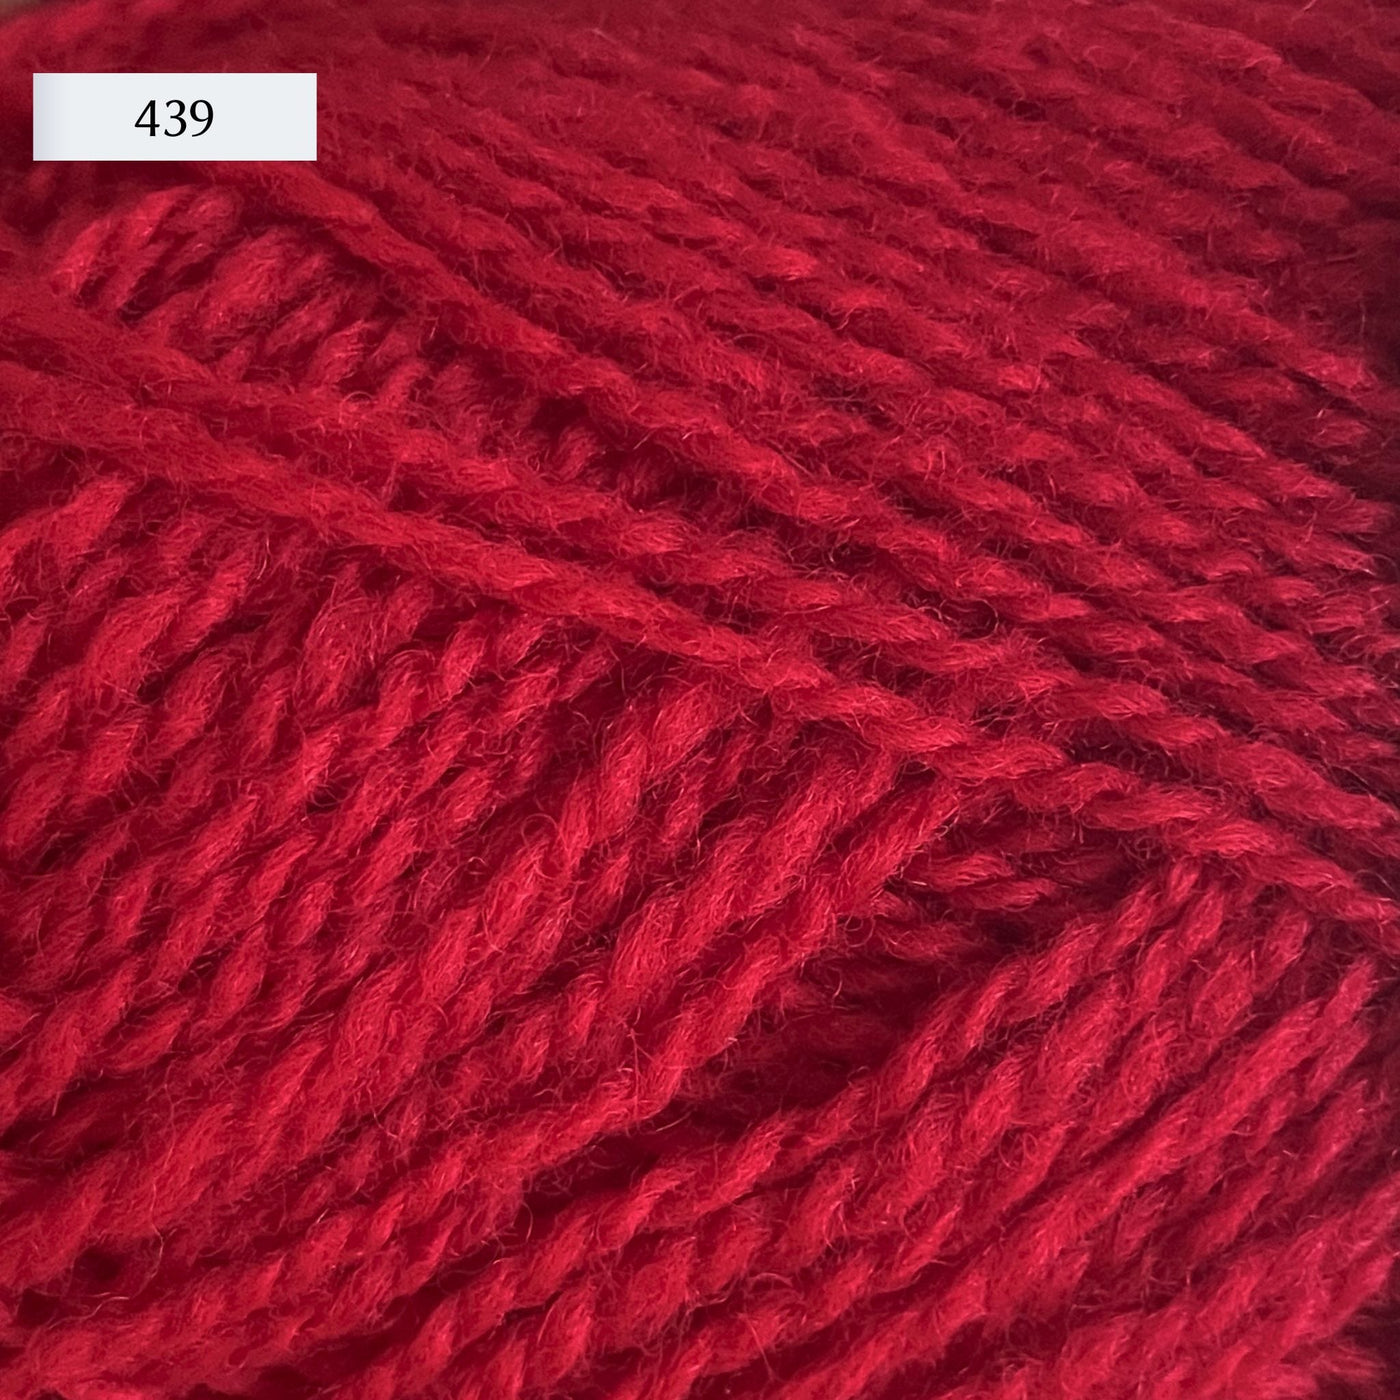 Rauma Finullgarn, a fingering/sport weight yarn, in color 439, a rich pink-red